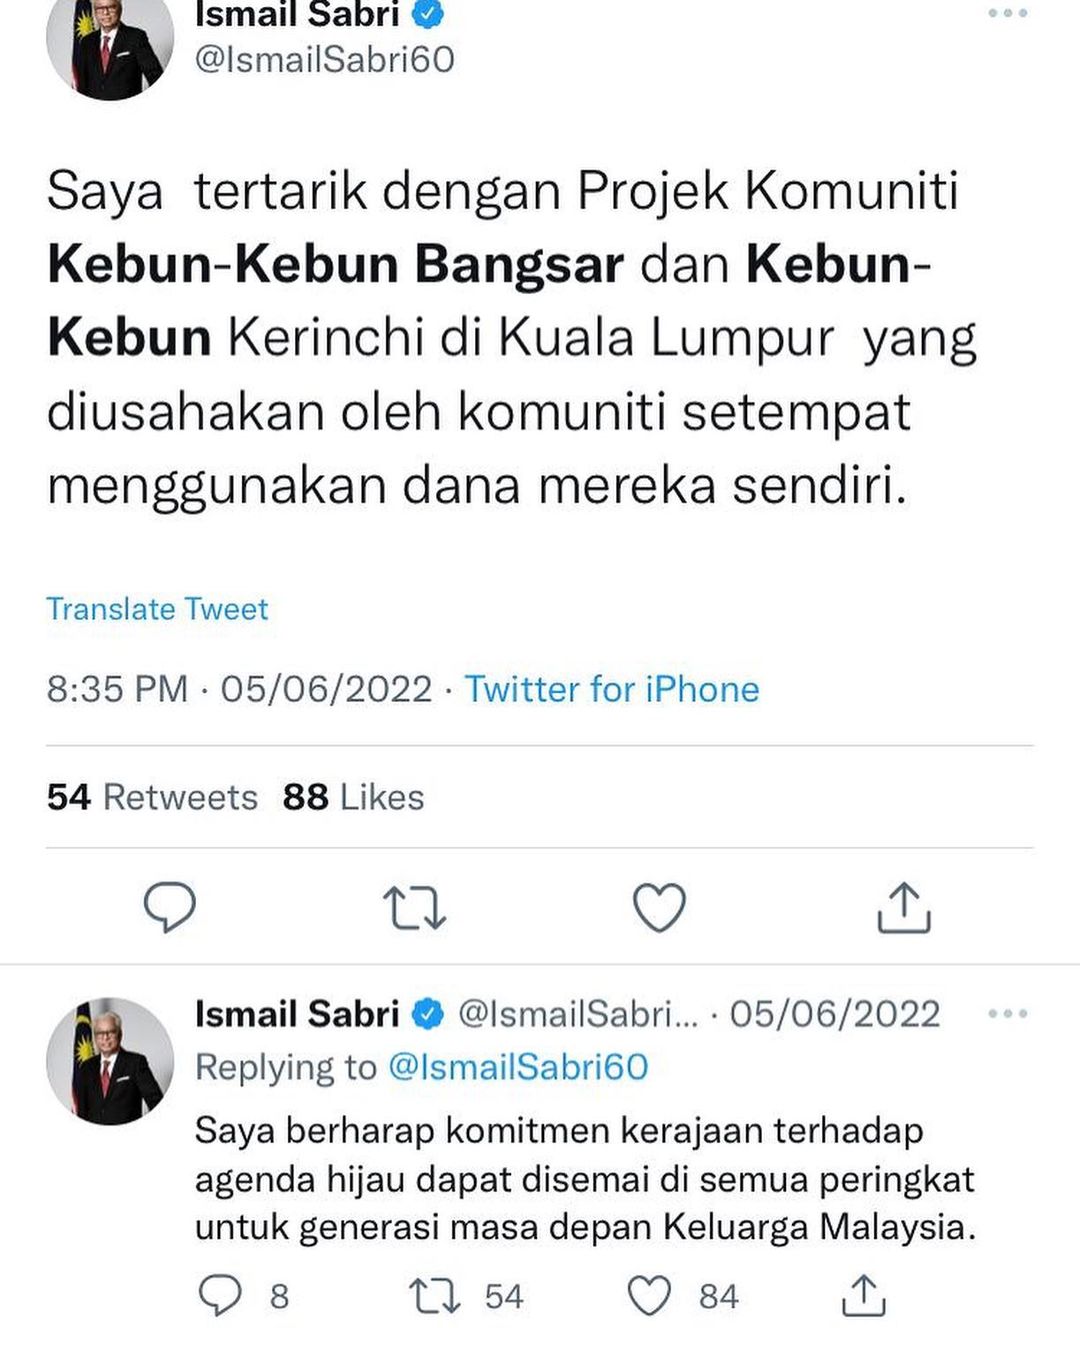 Prime Minister Ismail Sabri had previously praised Kebun-Kebun Bangsar for their efforts on World Environment Day. Image credit: kebunkebunbangsar